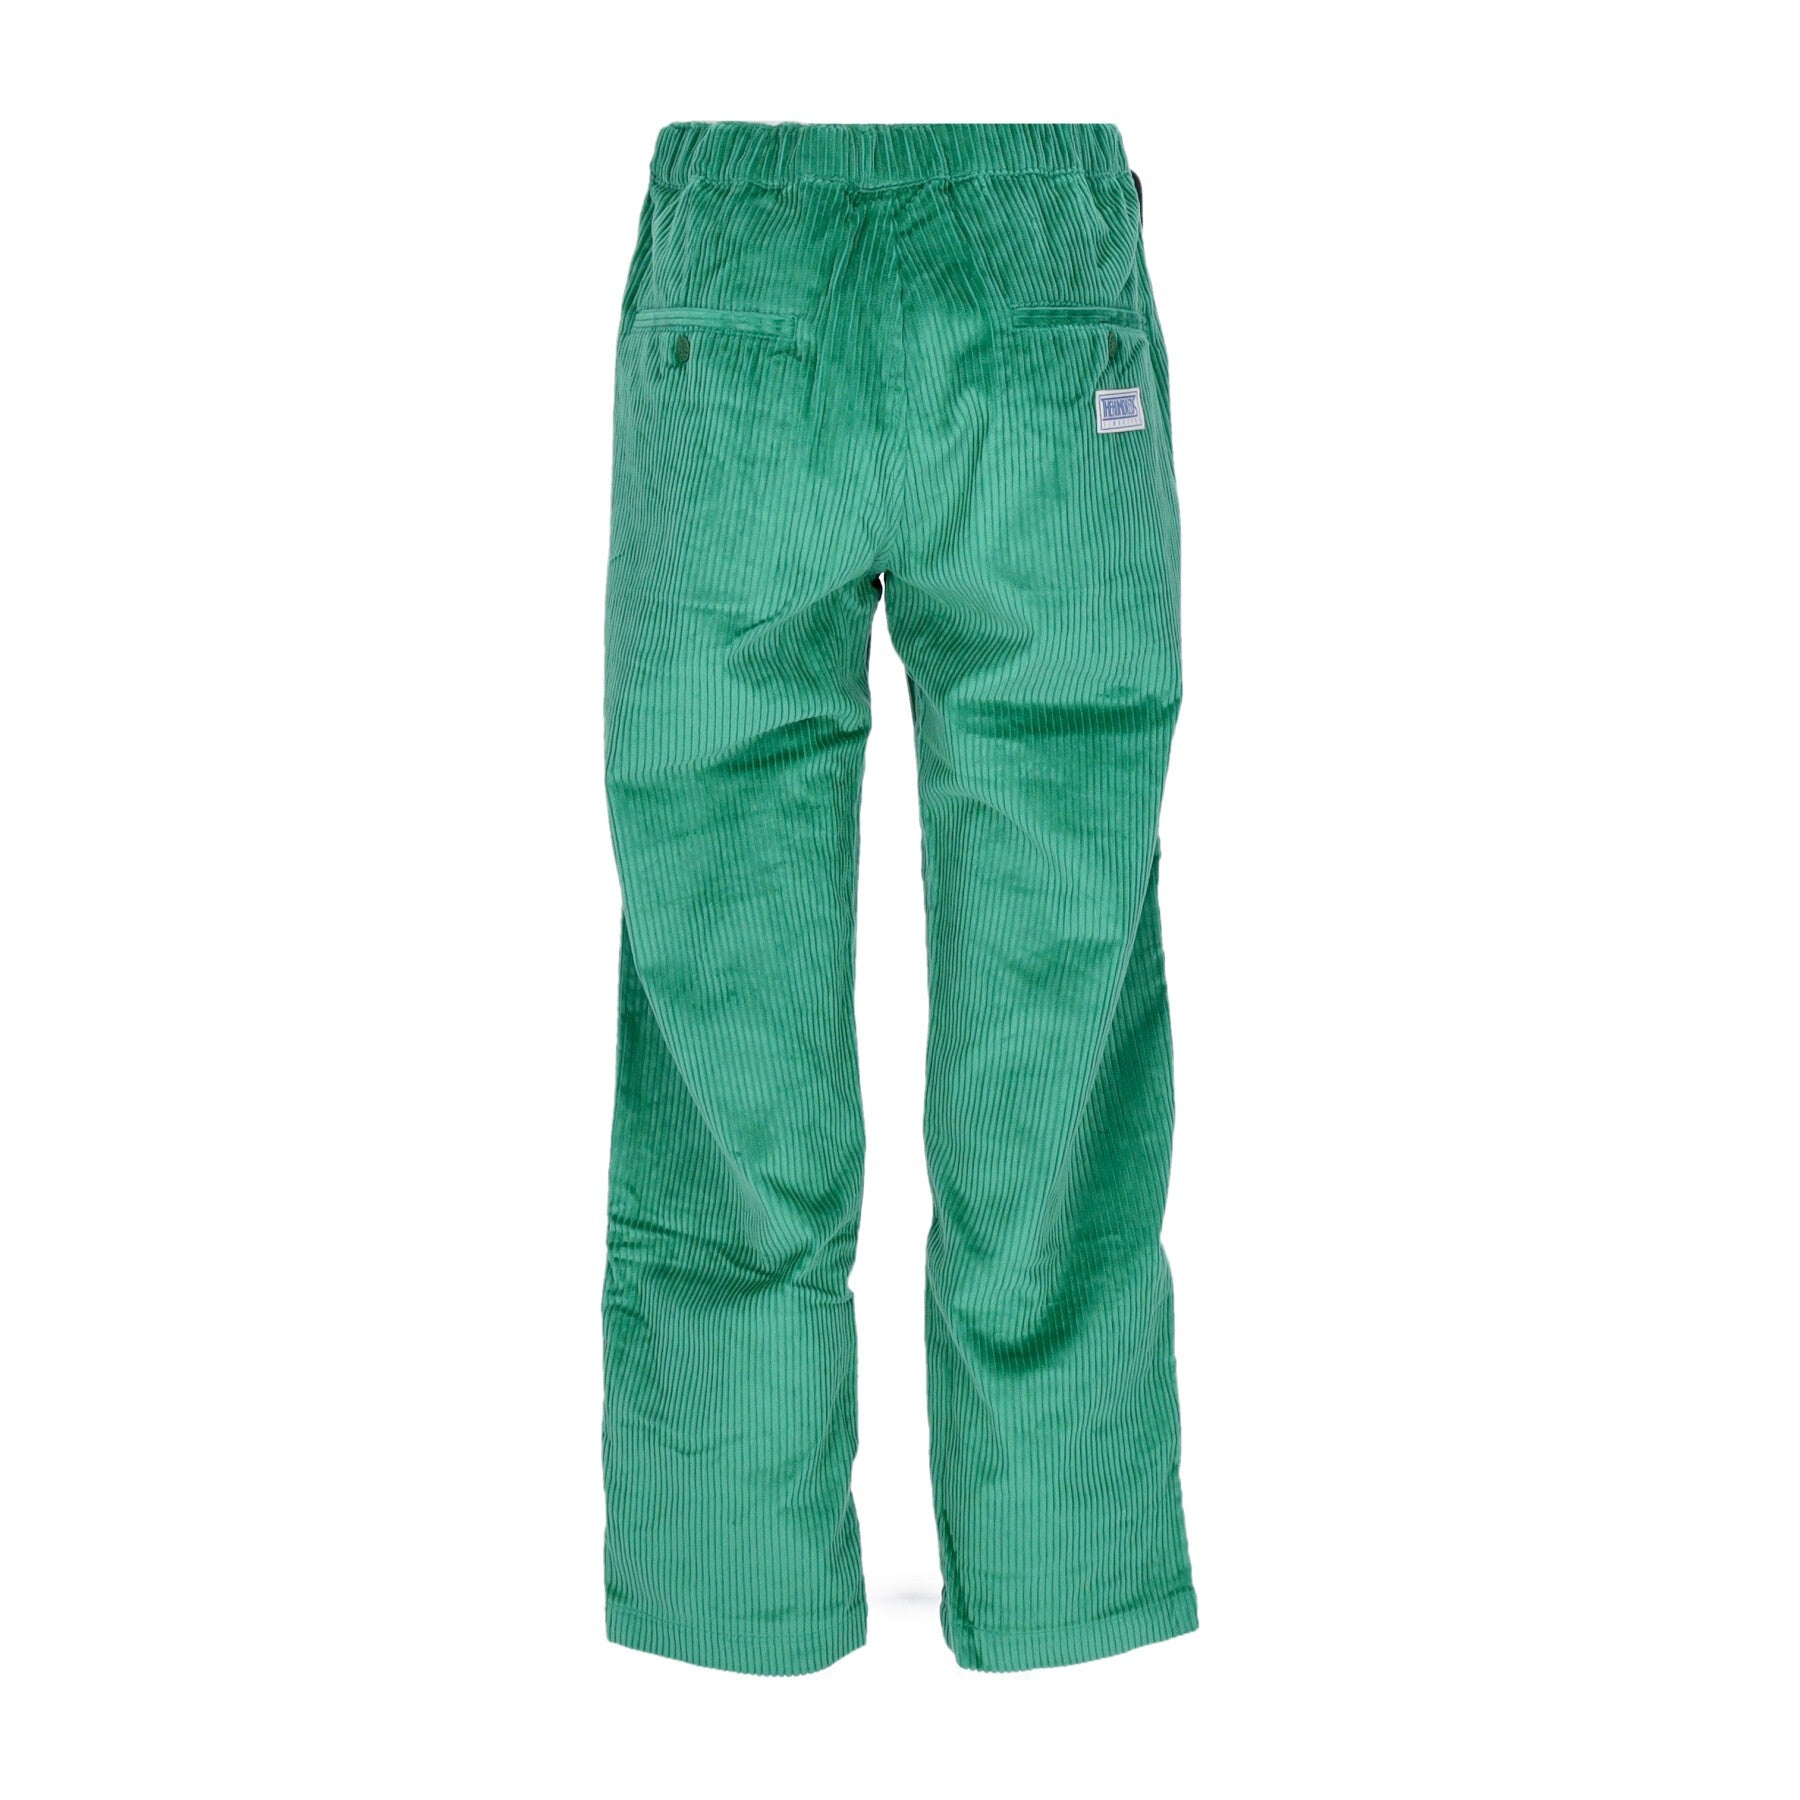 Long Men's Cord Pants Green